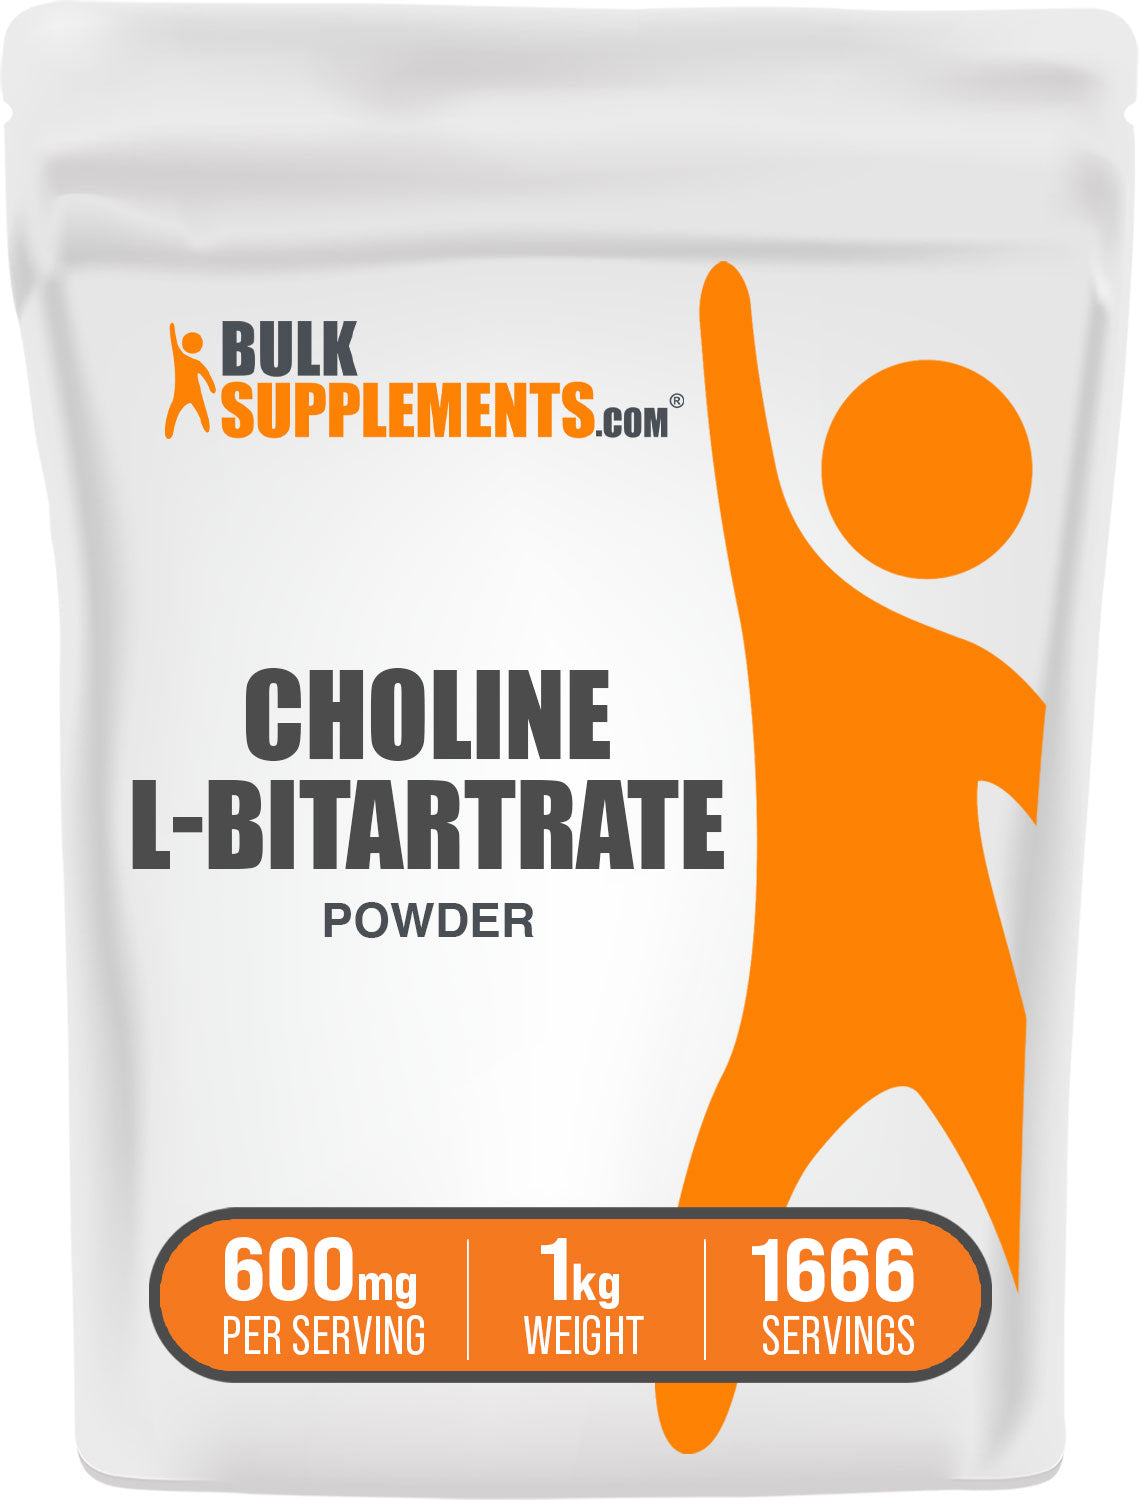 Choline L-Bitartrate Powder 1kg bag